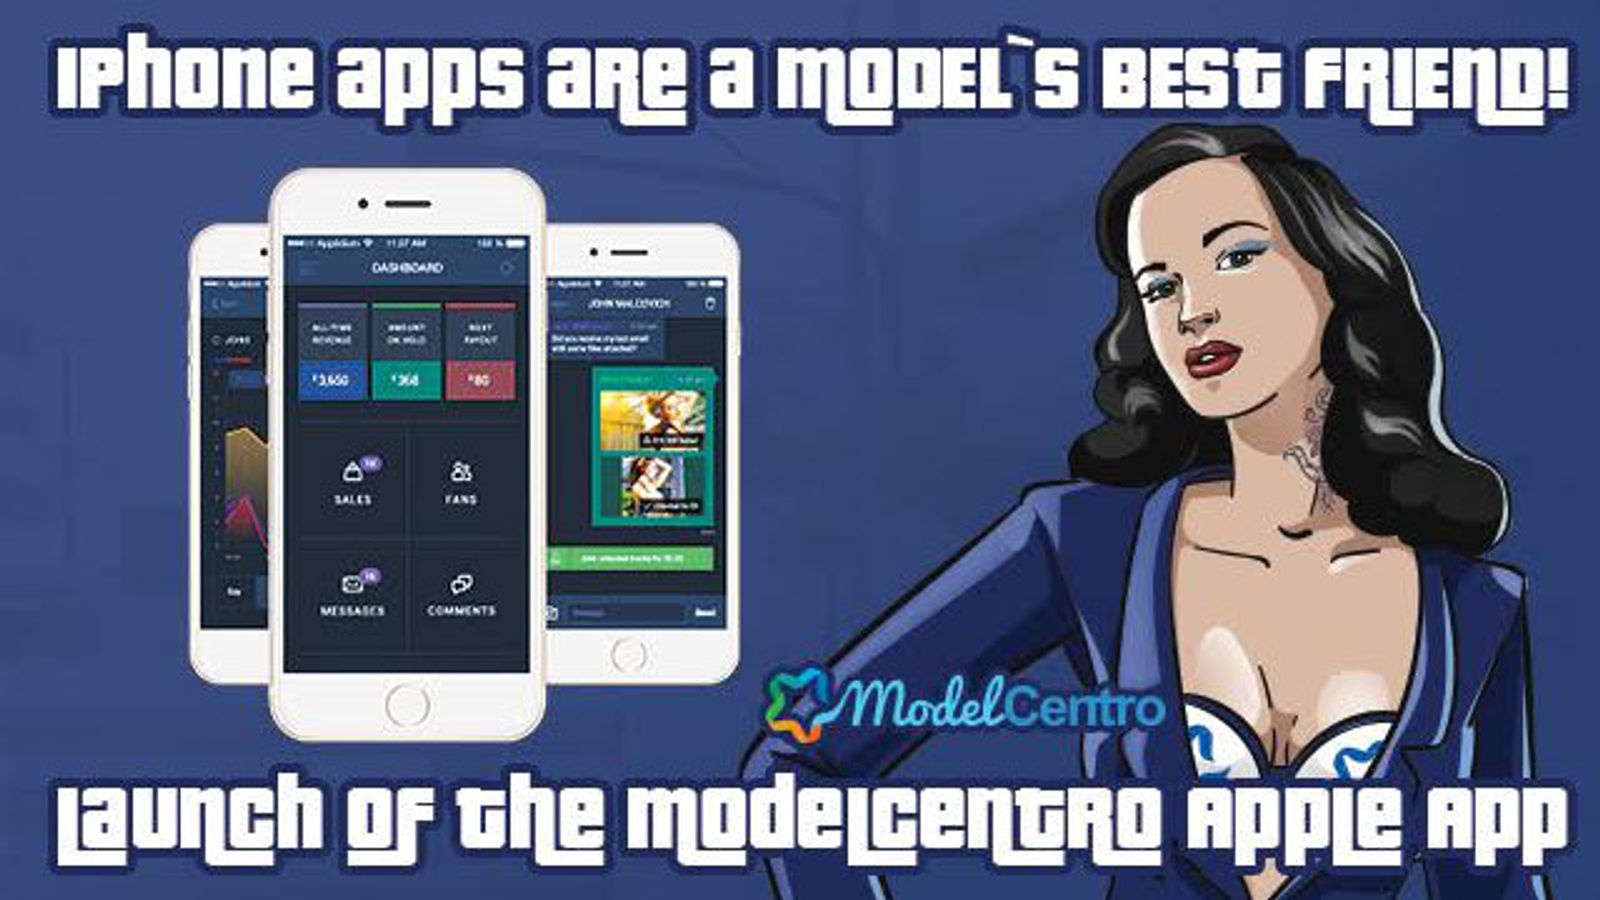 ModelCentro Launches iPhone/iPad App